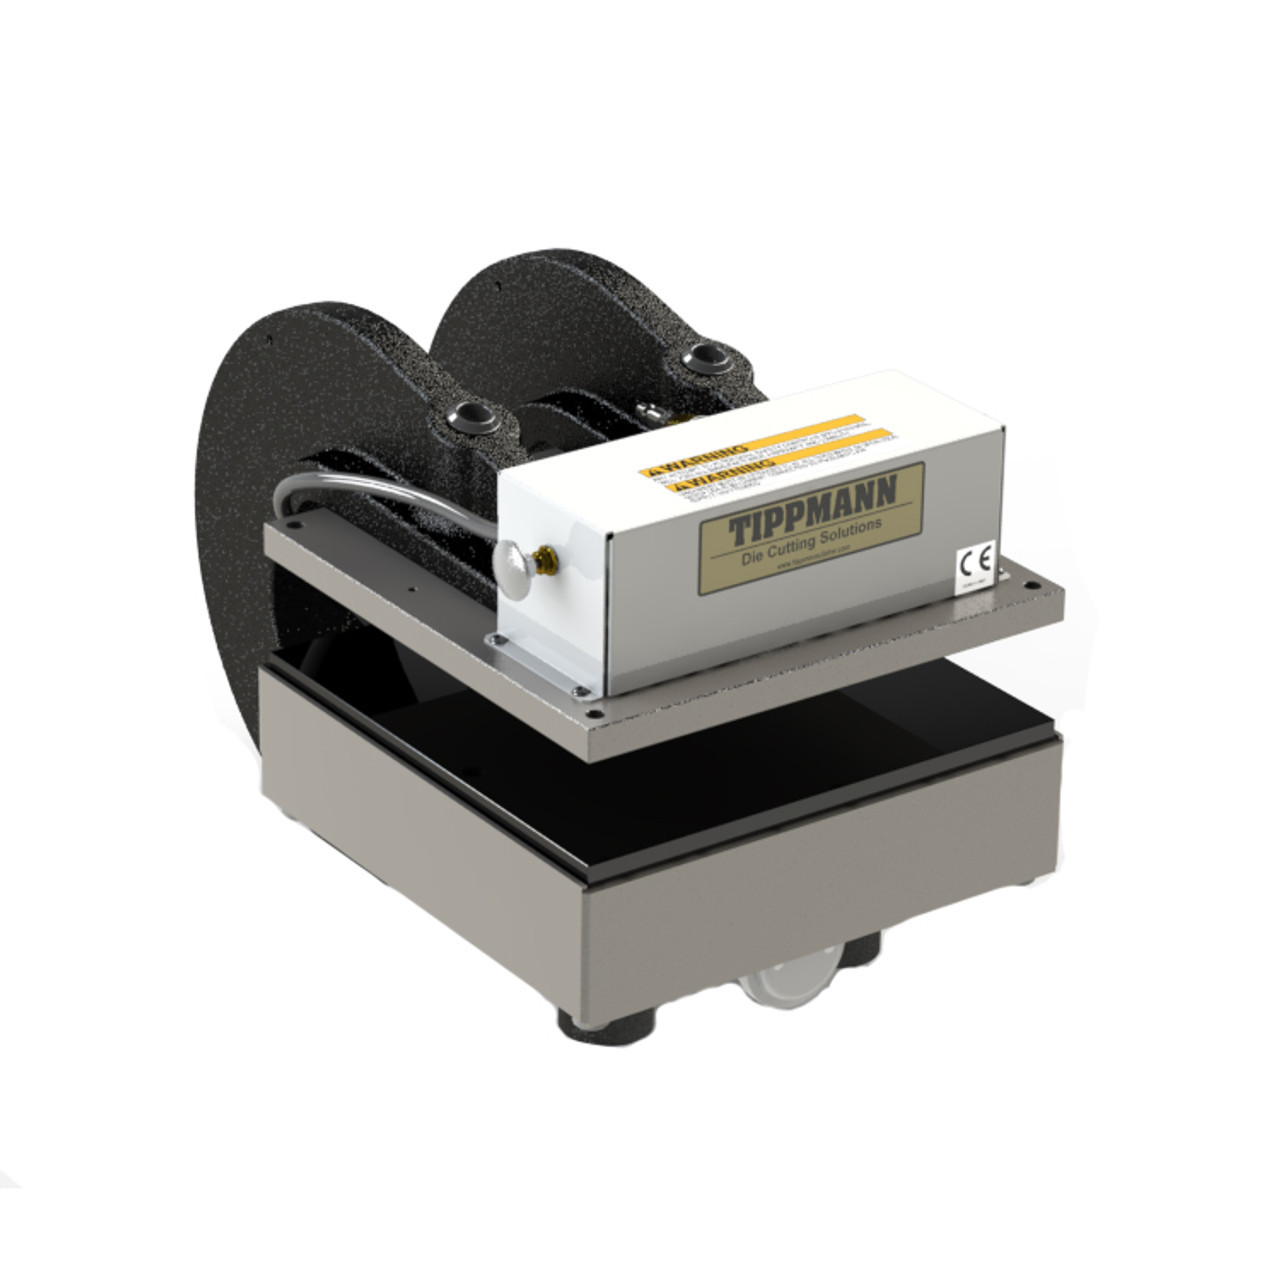 Tippmann Clicker 700 Die Cut Press W/ Air Accumulator & Clicker Stand -  Tippmann Industrial